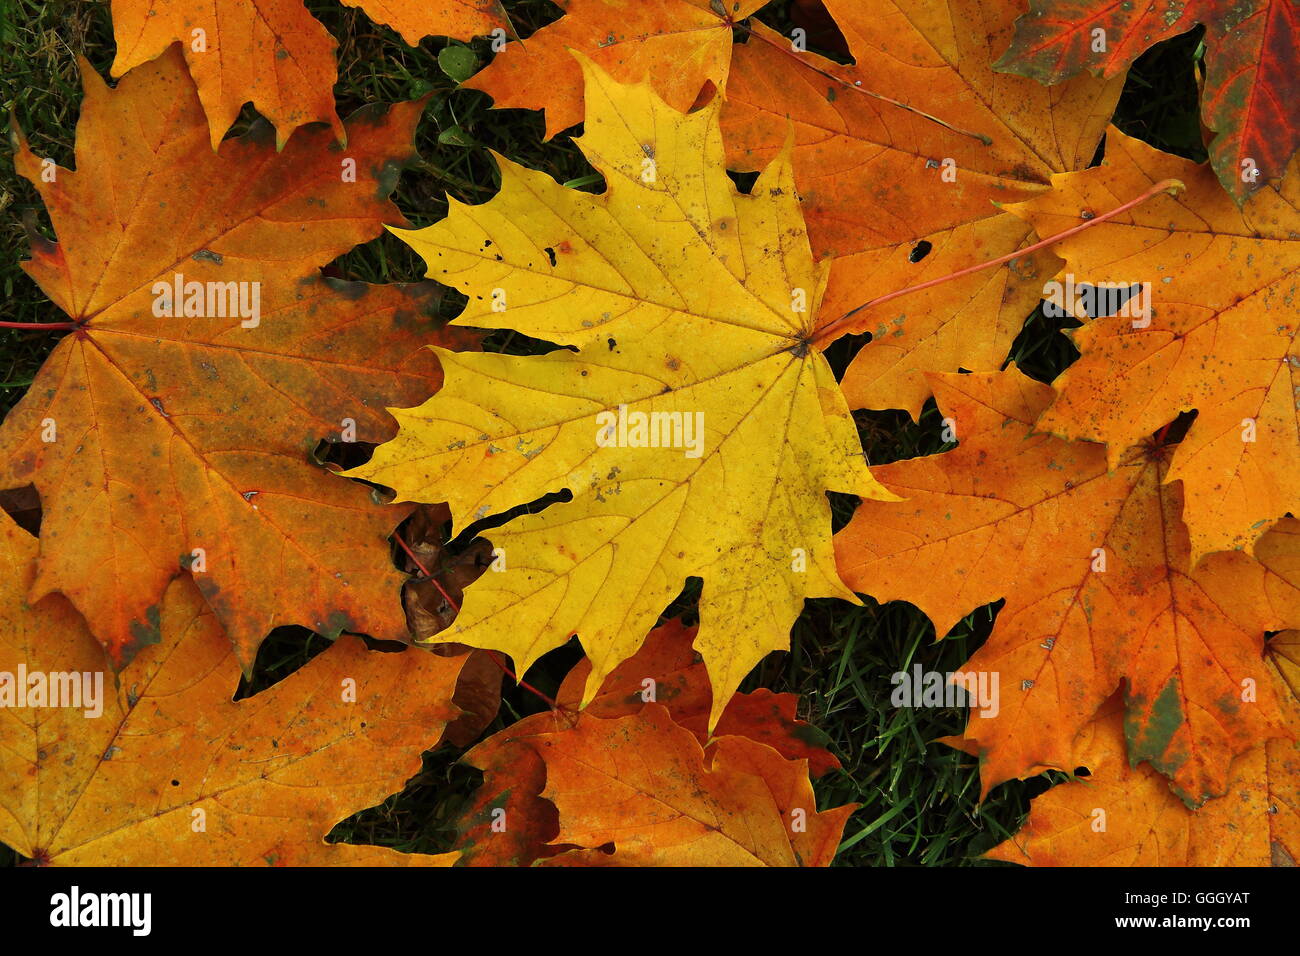 Foglie di autunno, foglie colorate, Norvegia acero / buntes herbstlaub des spitz-ahorn (Acer platanoides), cadono le foglie, caduta delle foglie Foto Stock